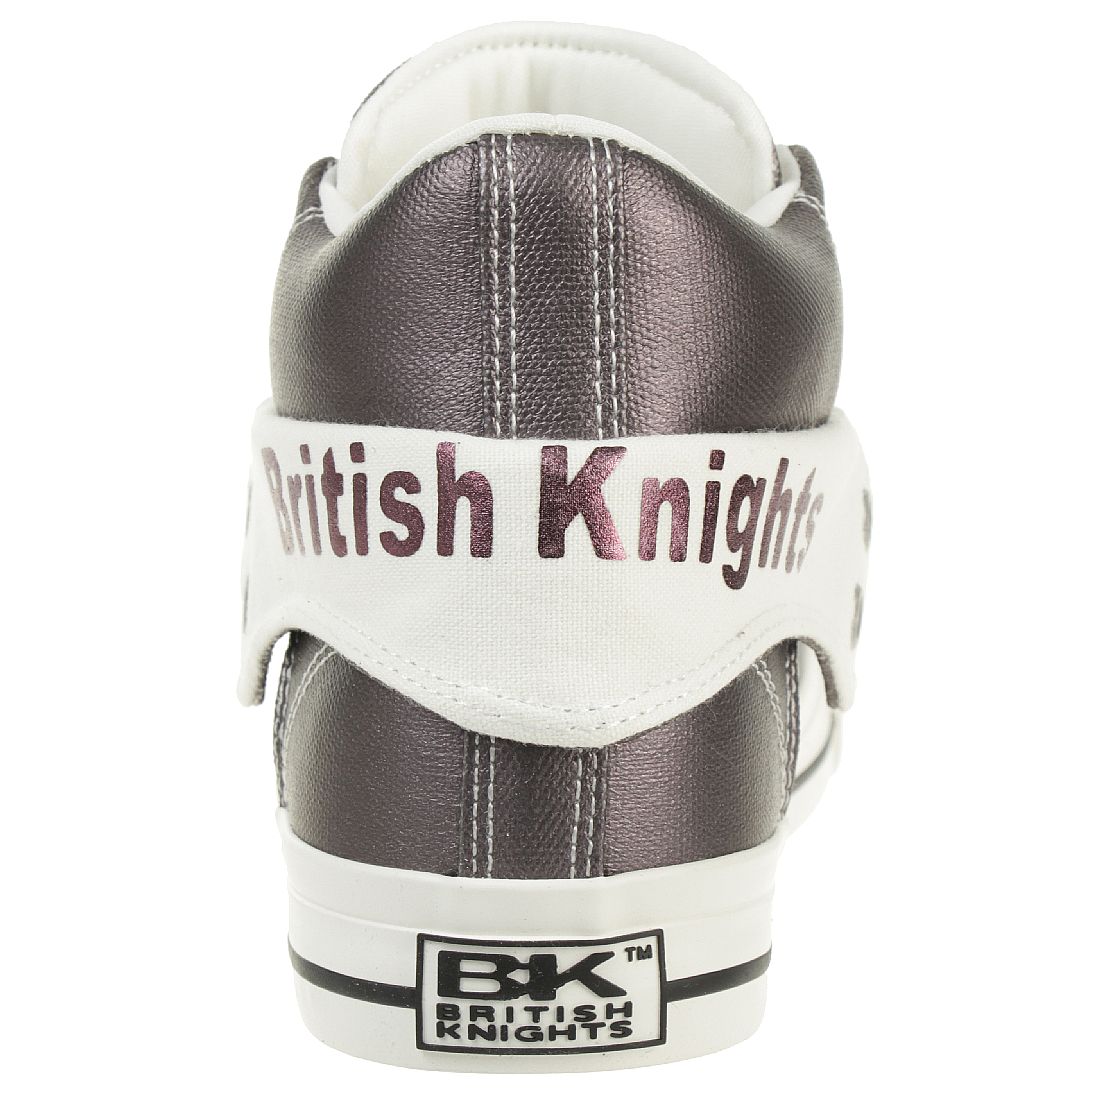 British Knights ROCO Metallic BK Damen Sneaker B43-3706-02 grau metallic Textil